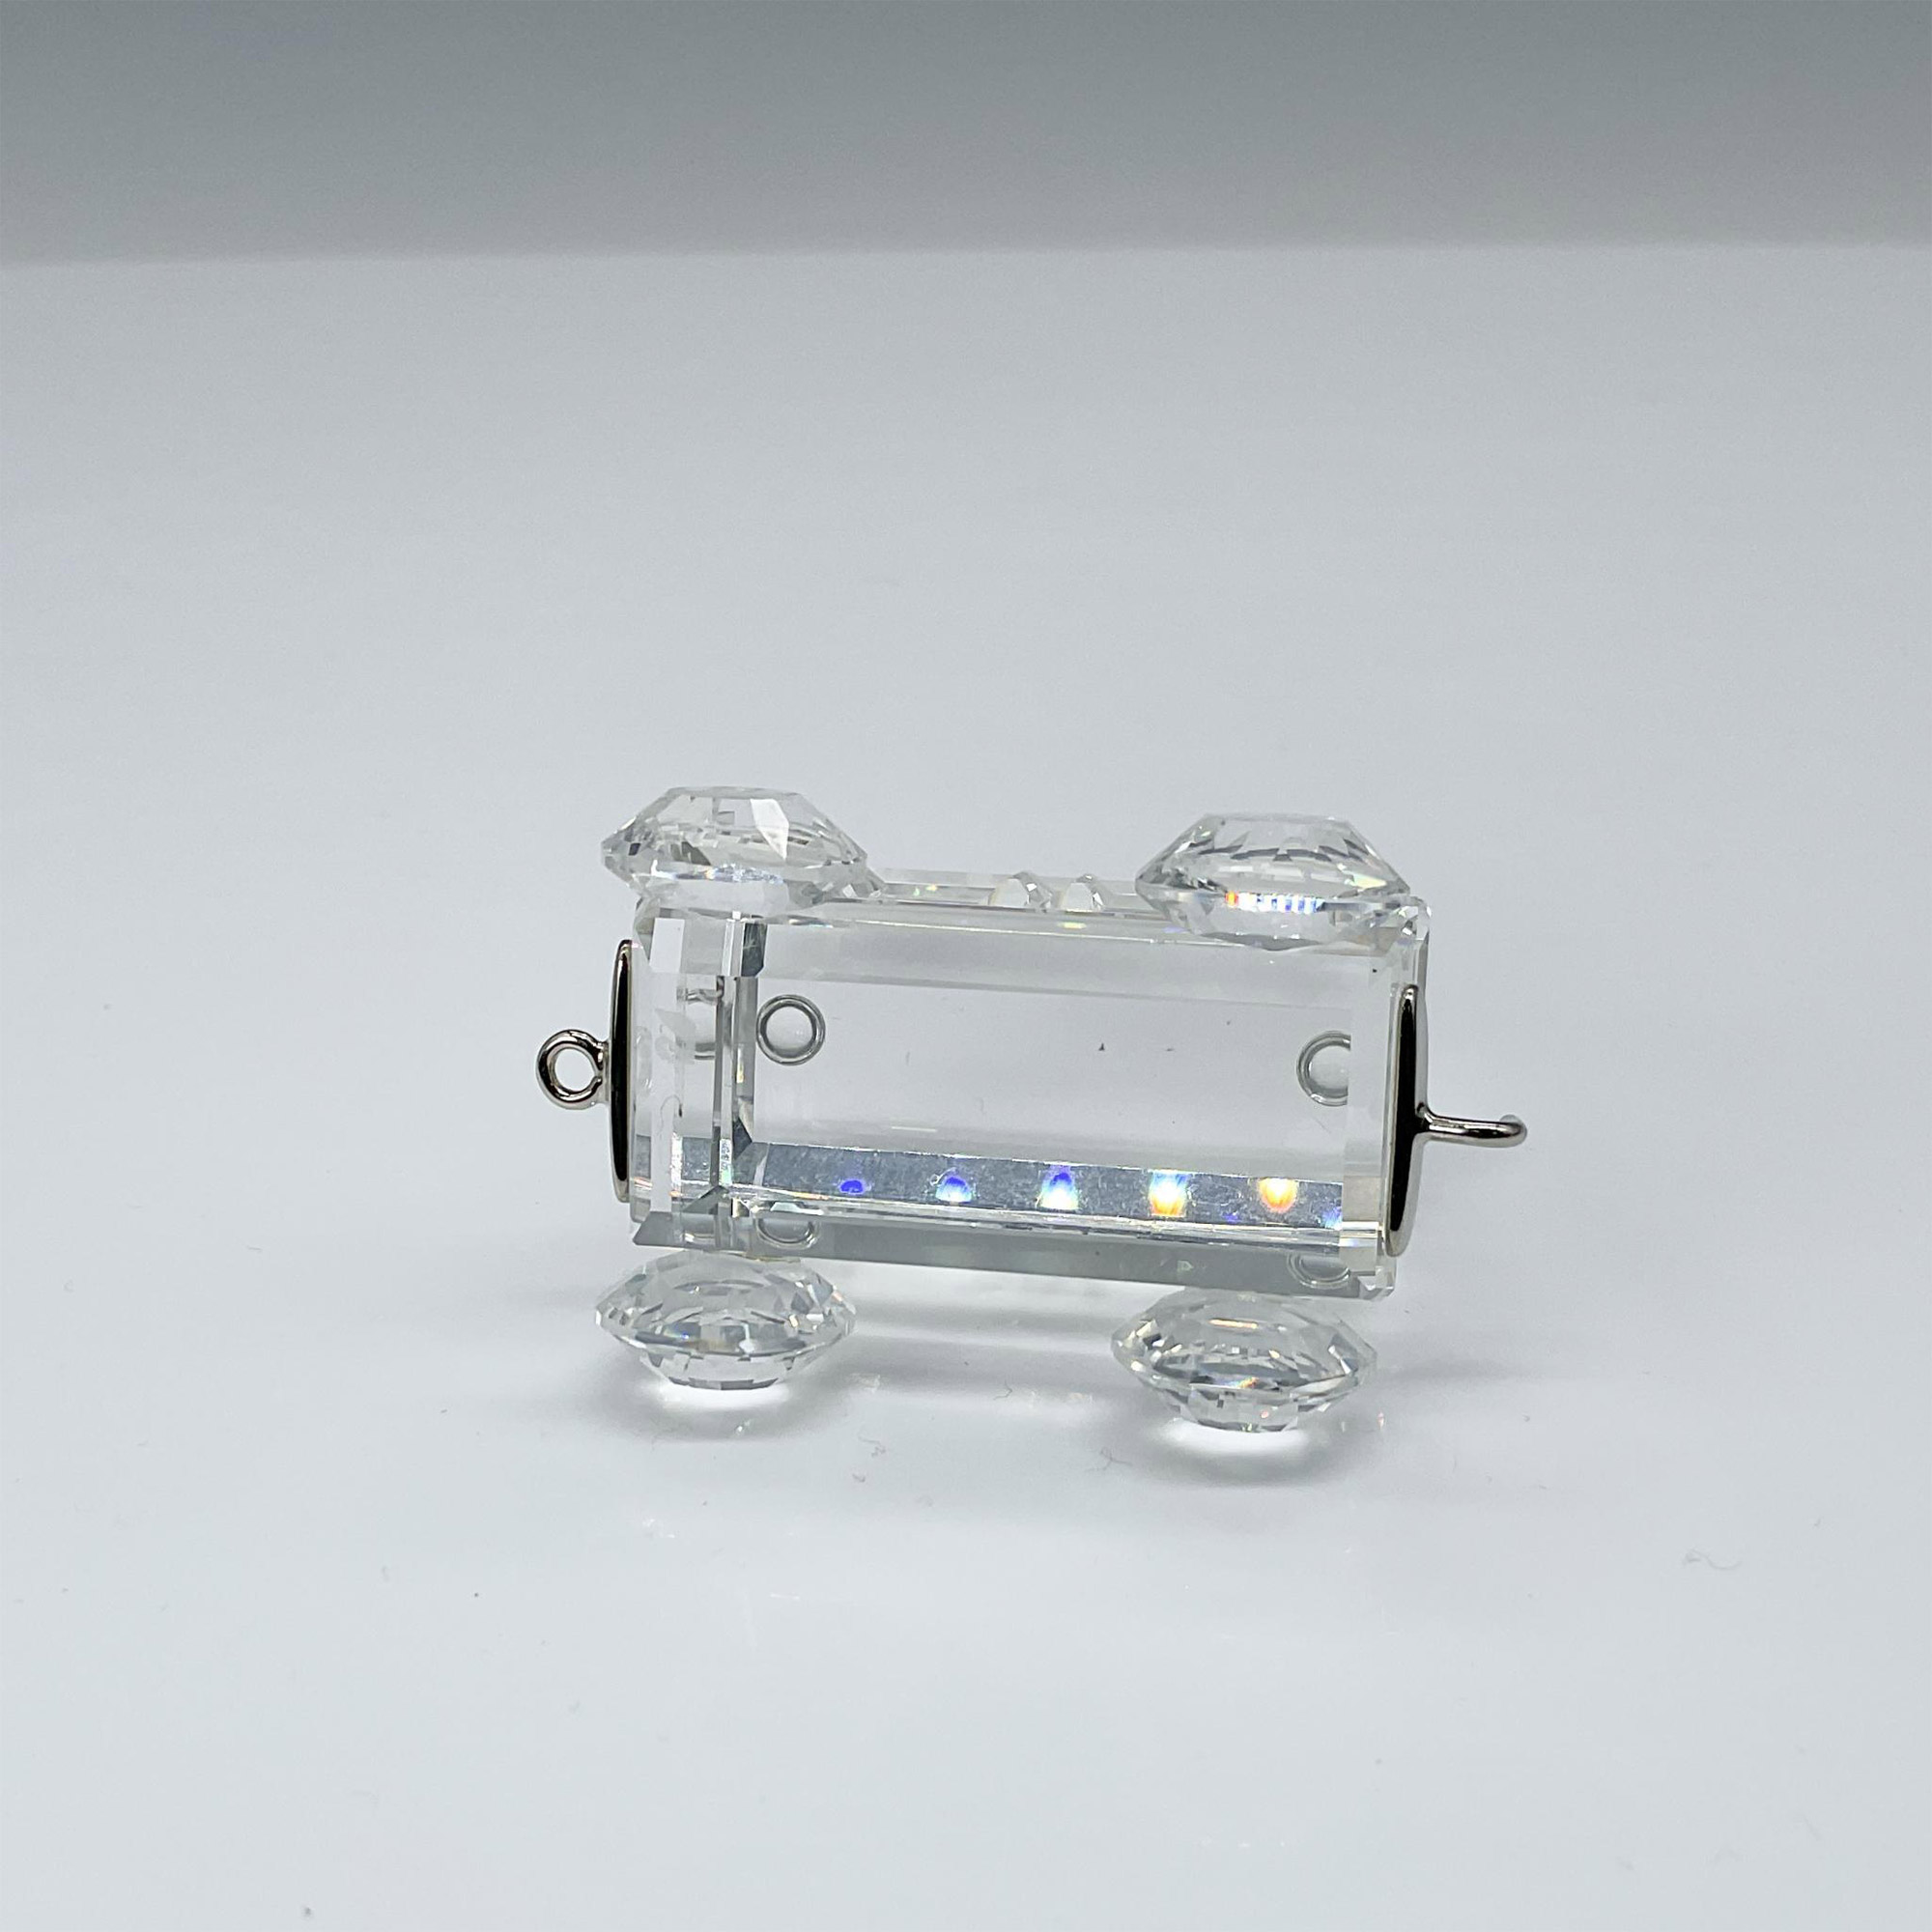 Swarovski Silver Crystal Figurine, Train Passenger Car - Image 3 of 4